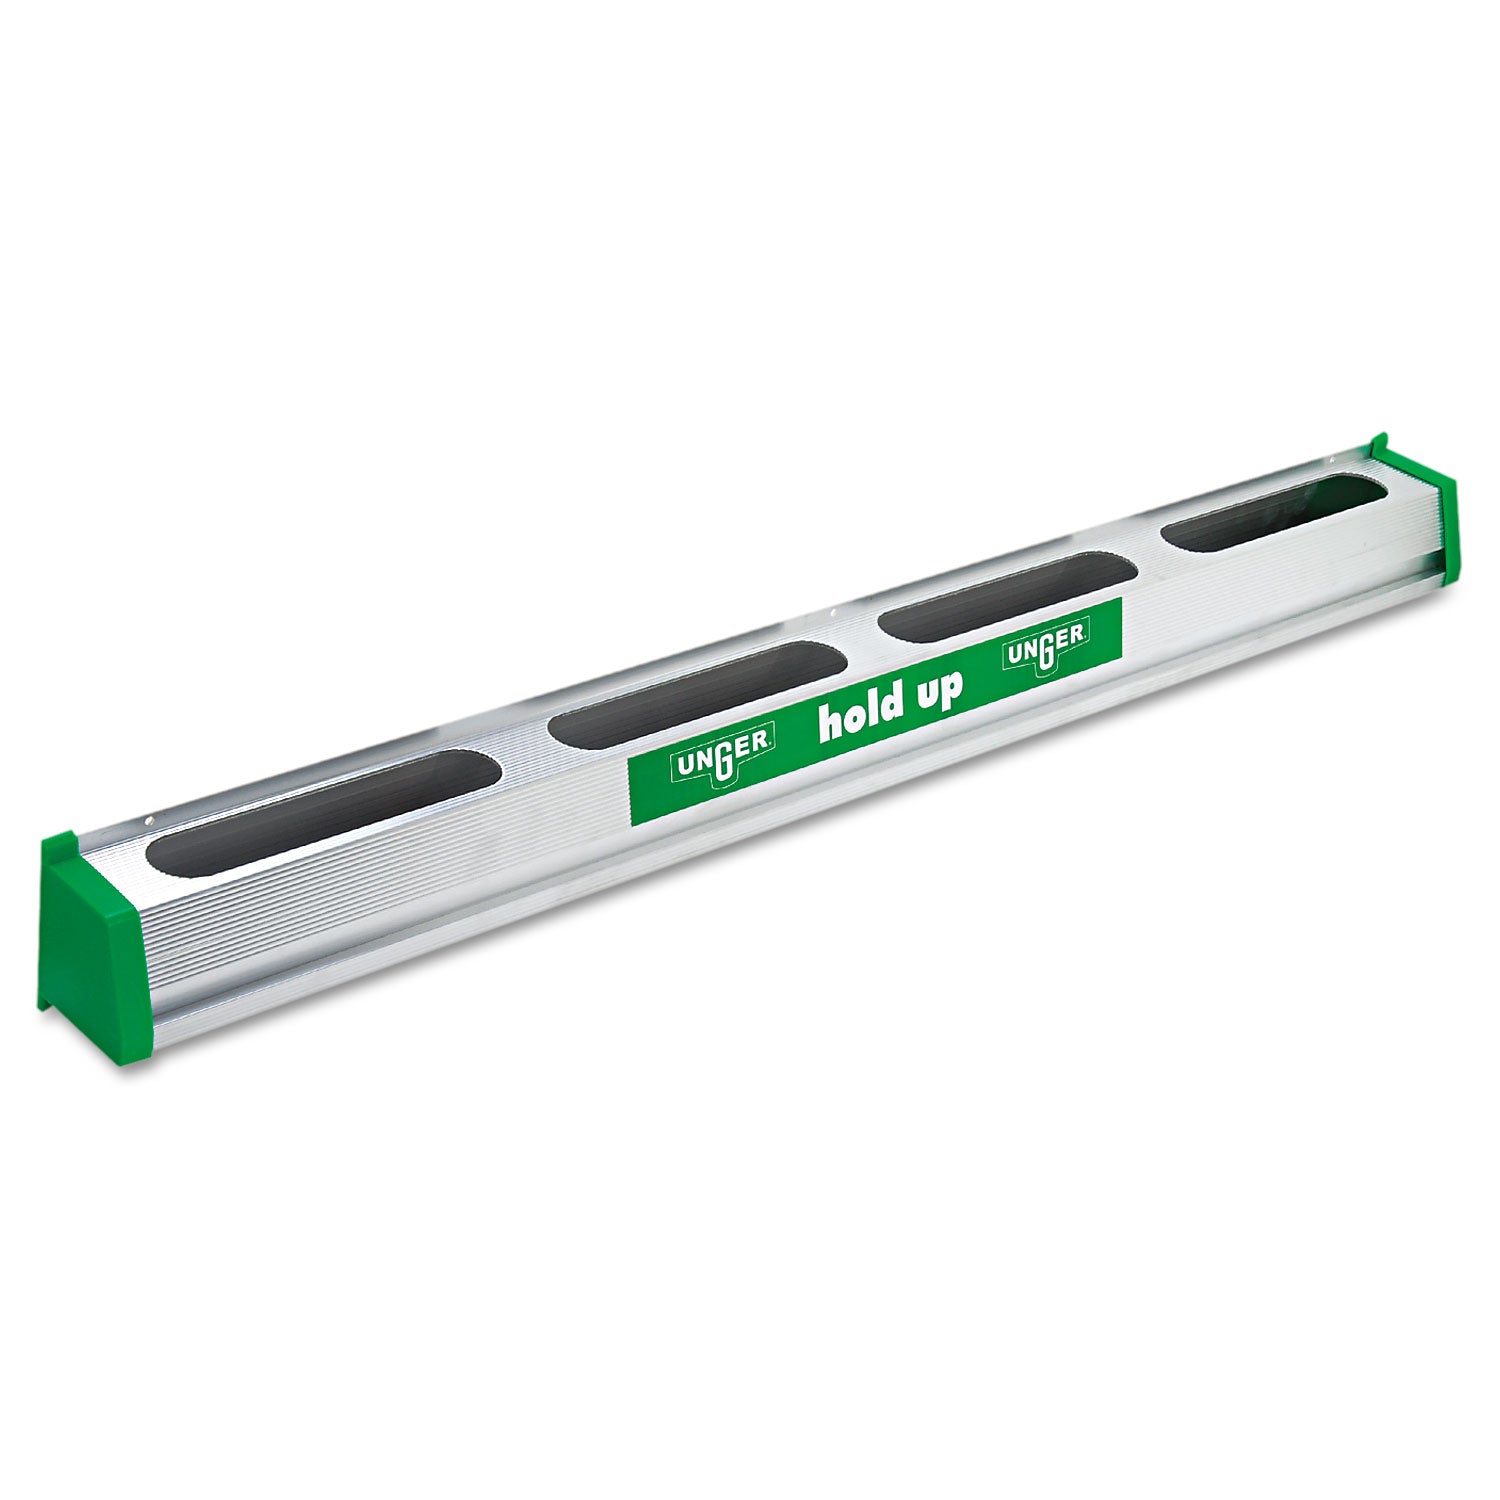 Hold Up Aluminum Tool Rack, 36w x 3.5d x 3.5h, Aluminum/Green - 